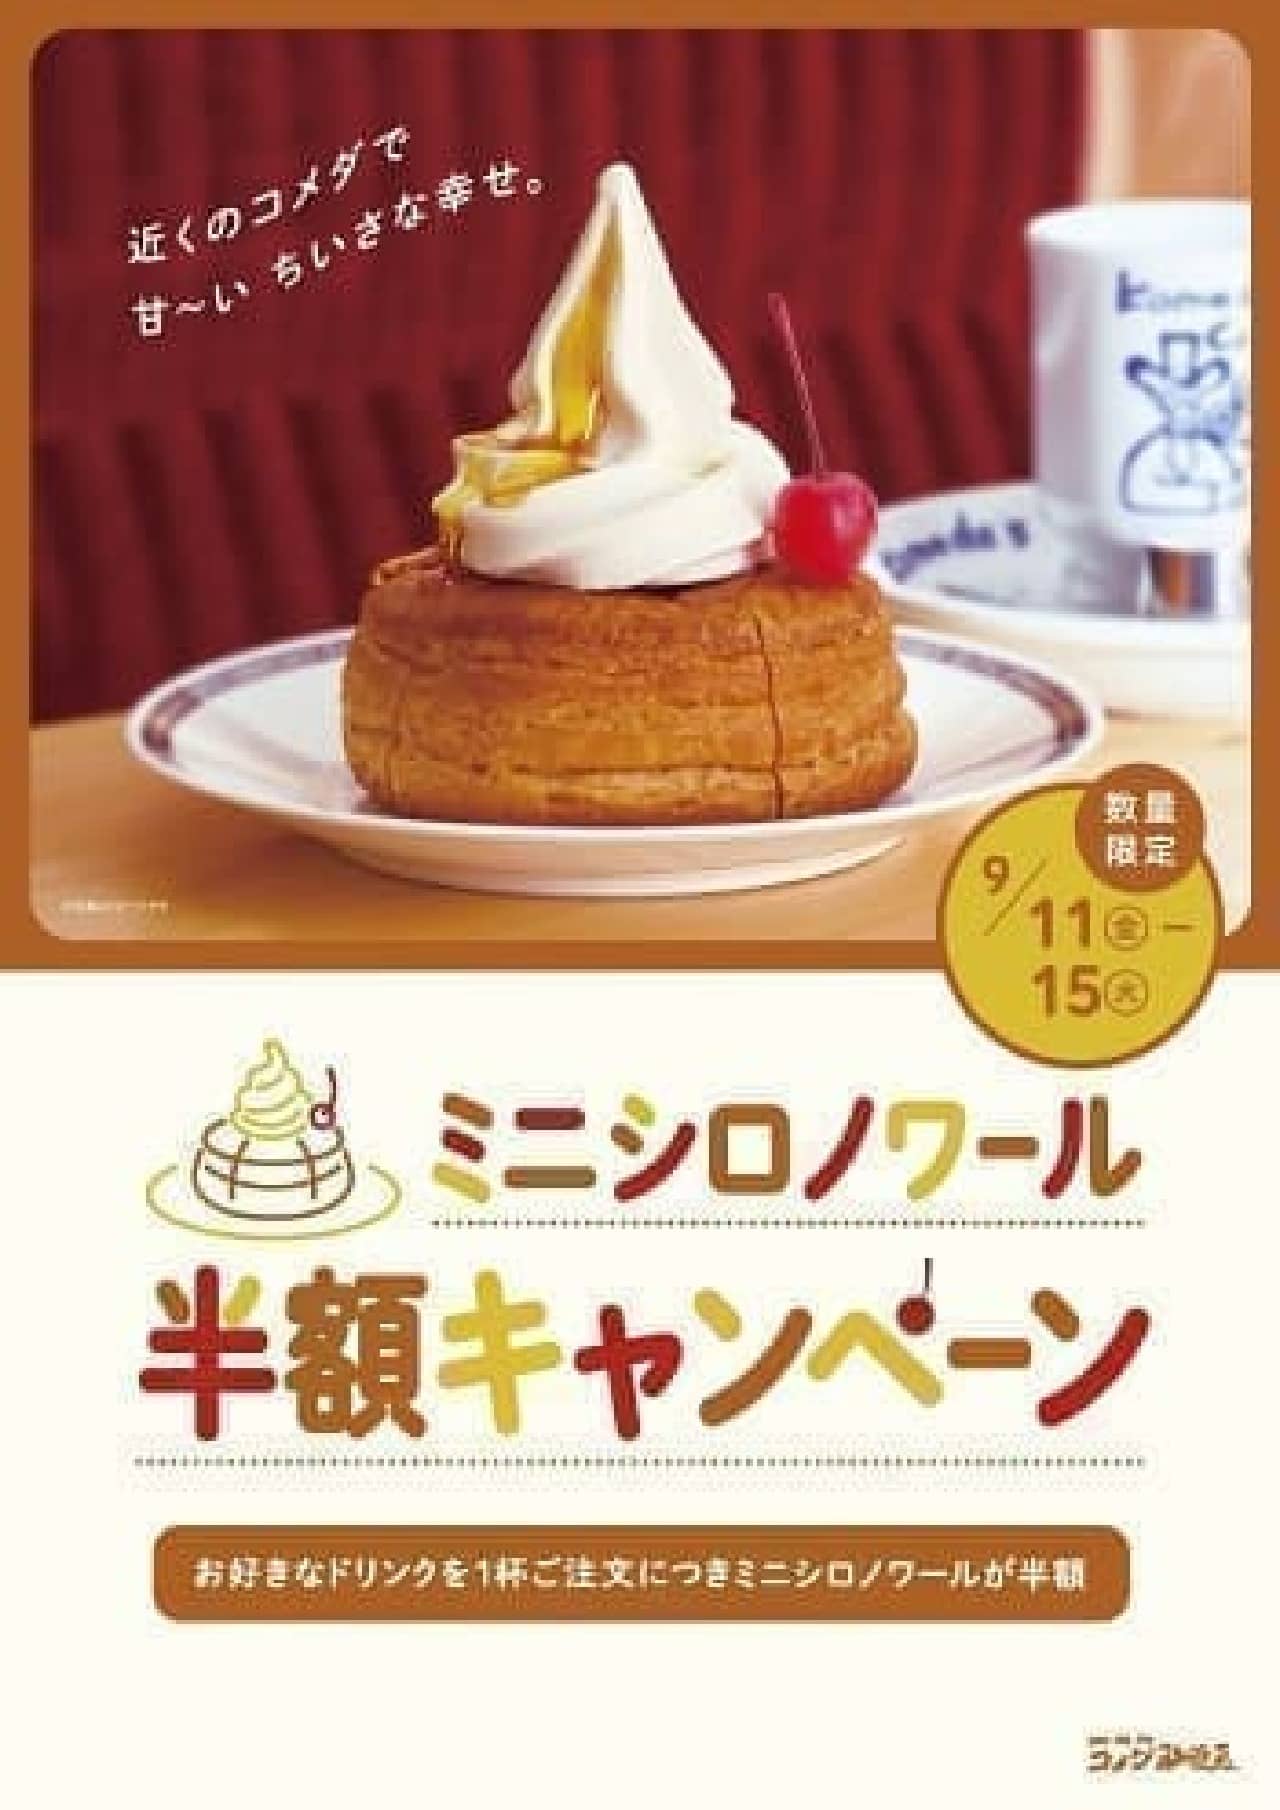 Komeda Coffee Shop "Mini Shiro Noir Half Price Campaign"